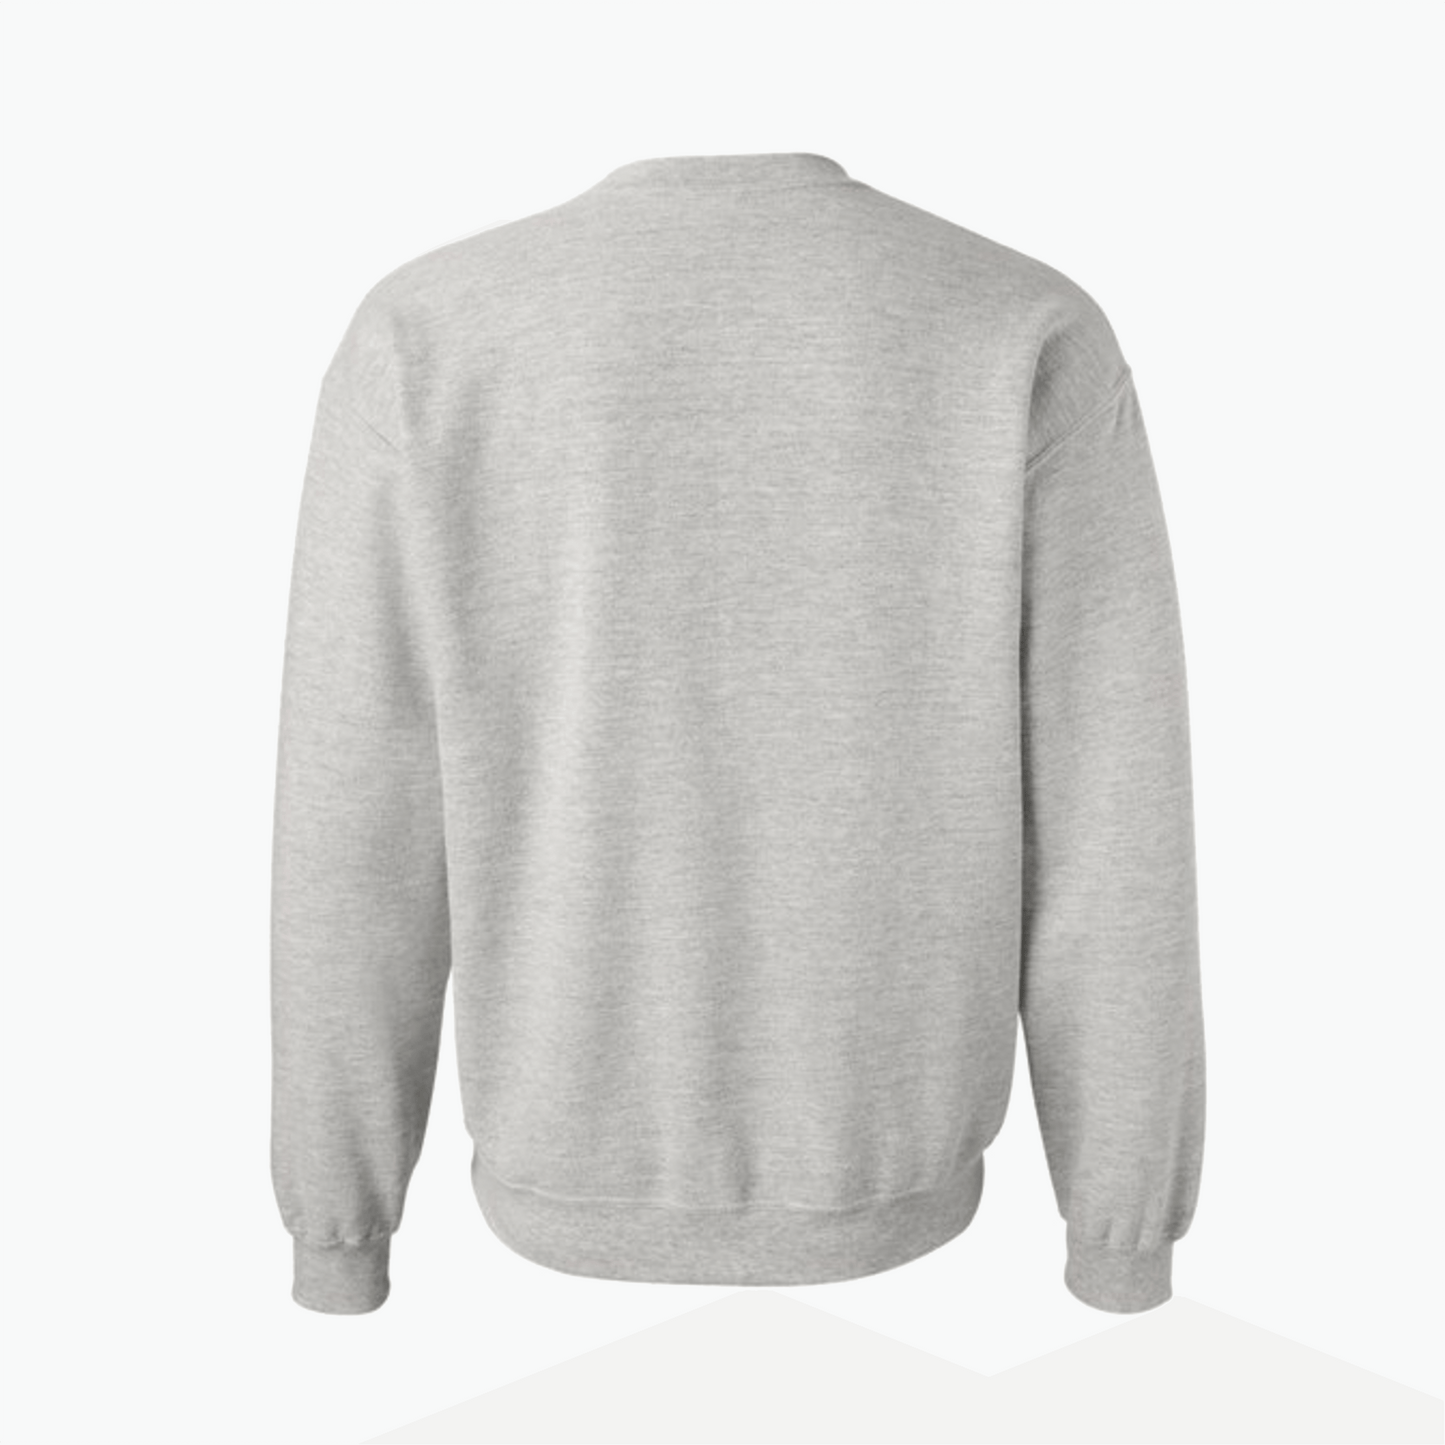 Forbidden Paint Sweatshirt (Gray) - A Yellow Object